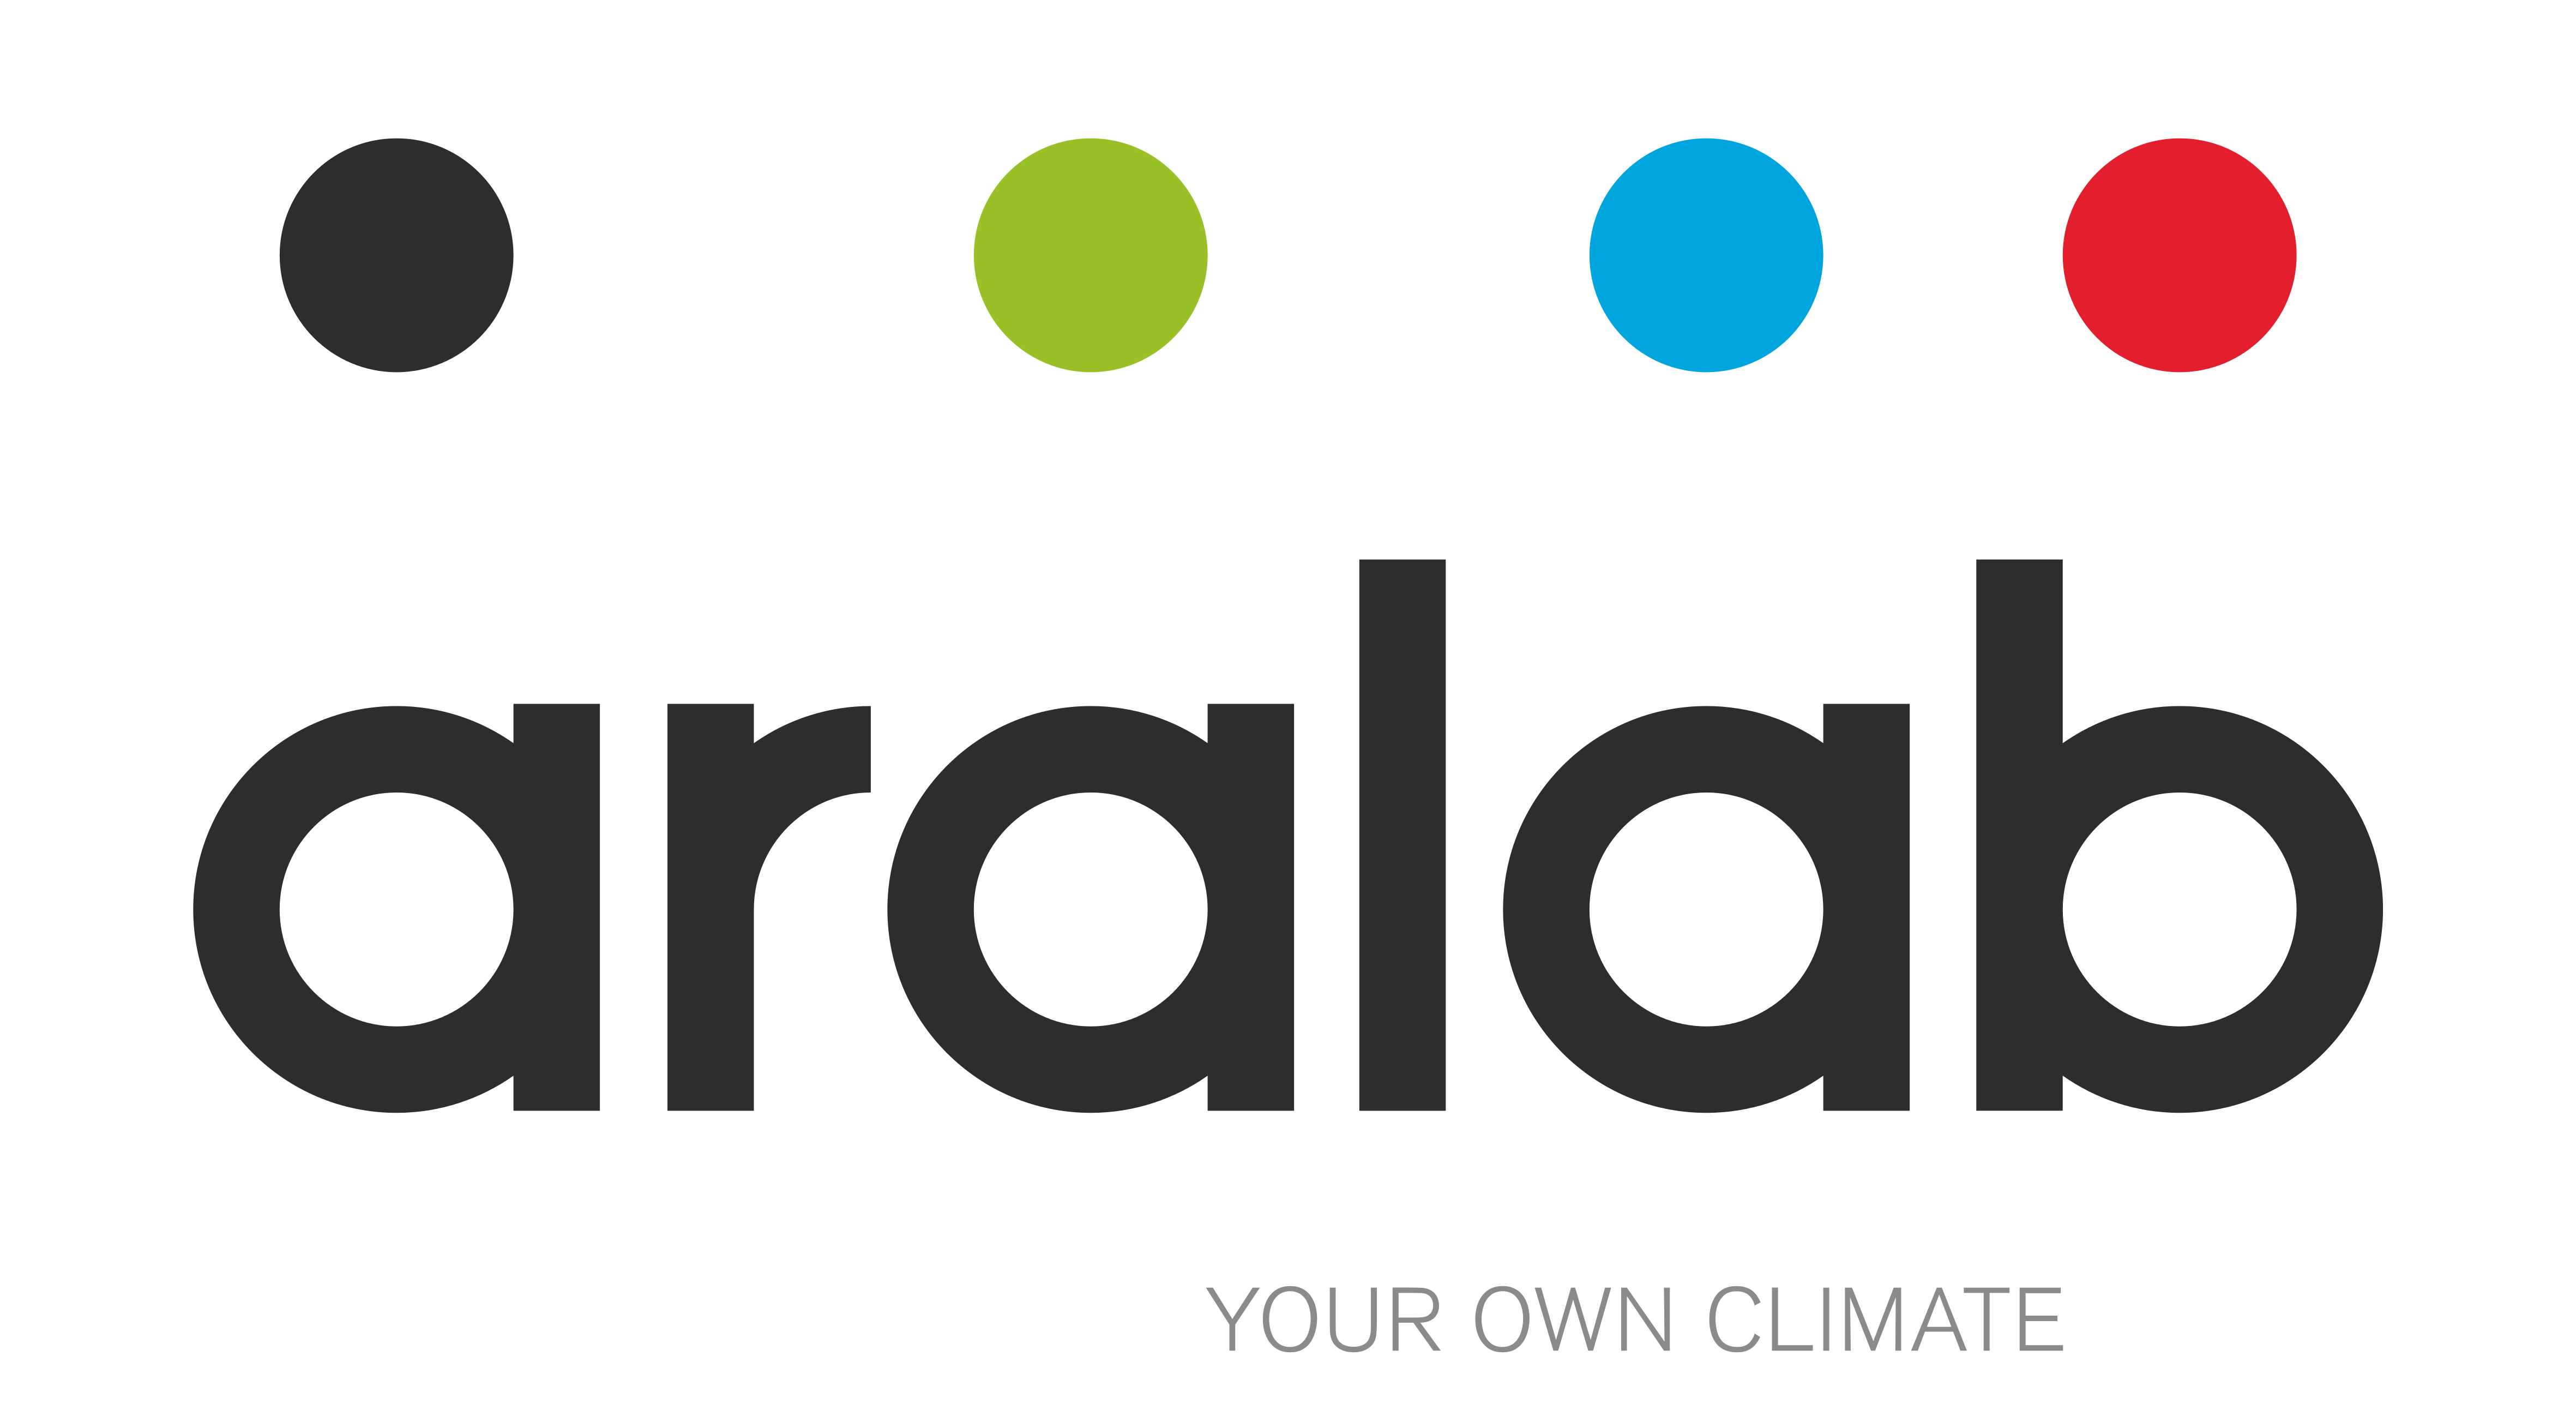 Aralab logo